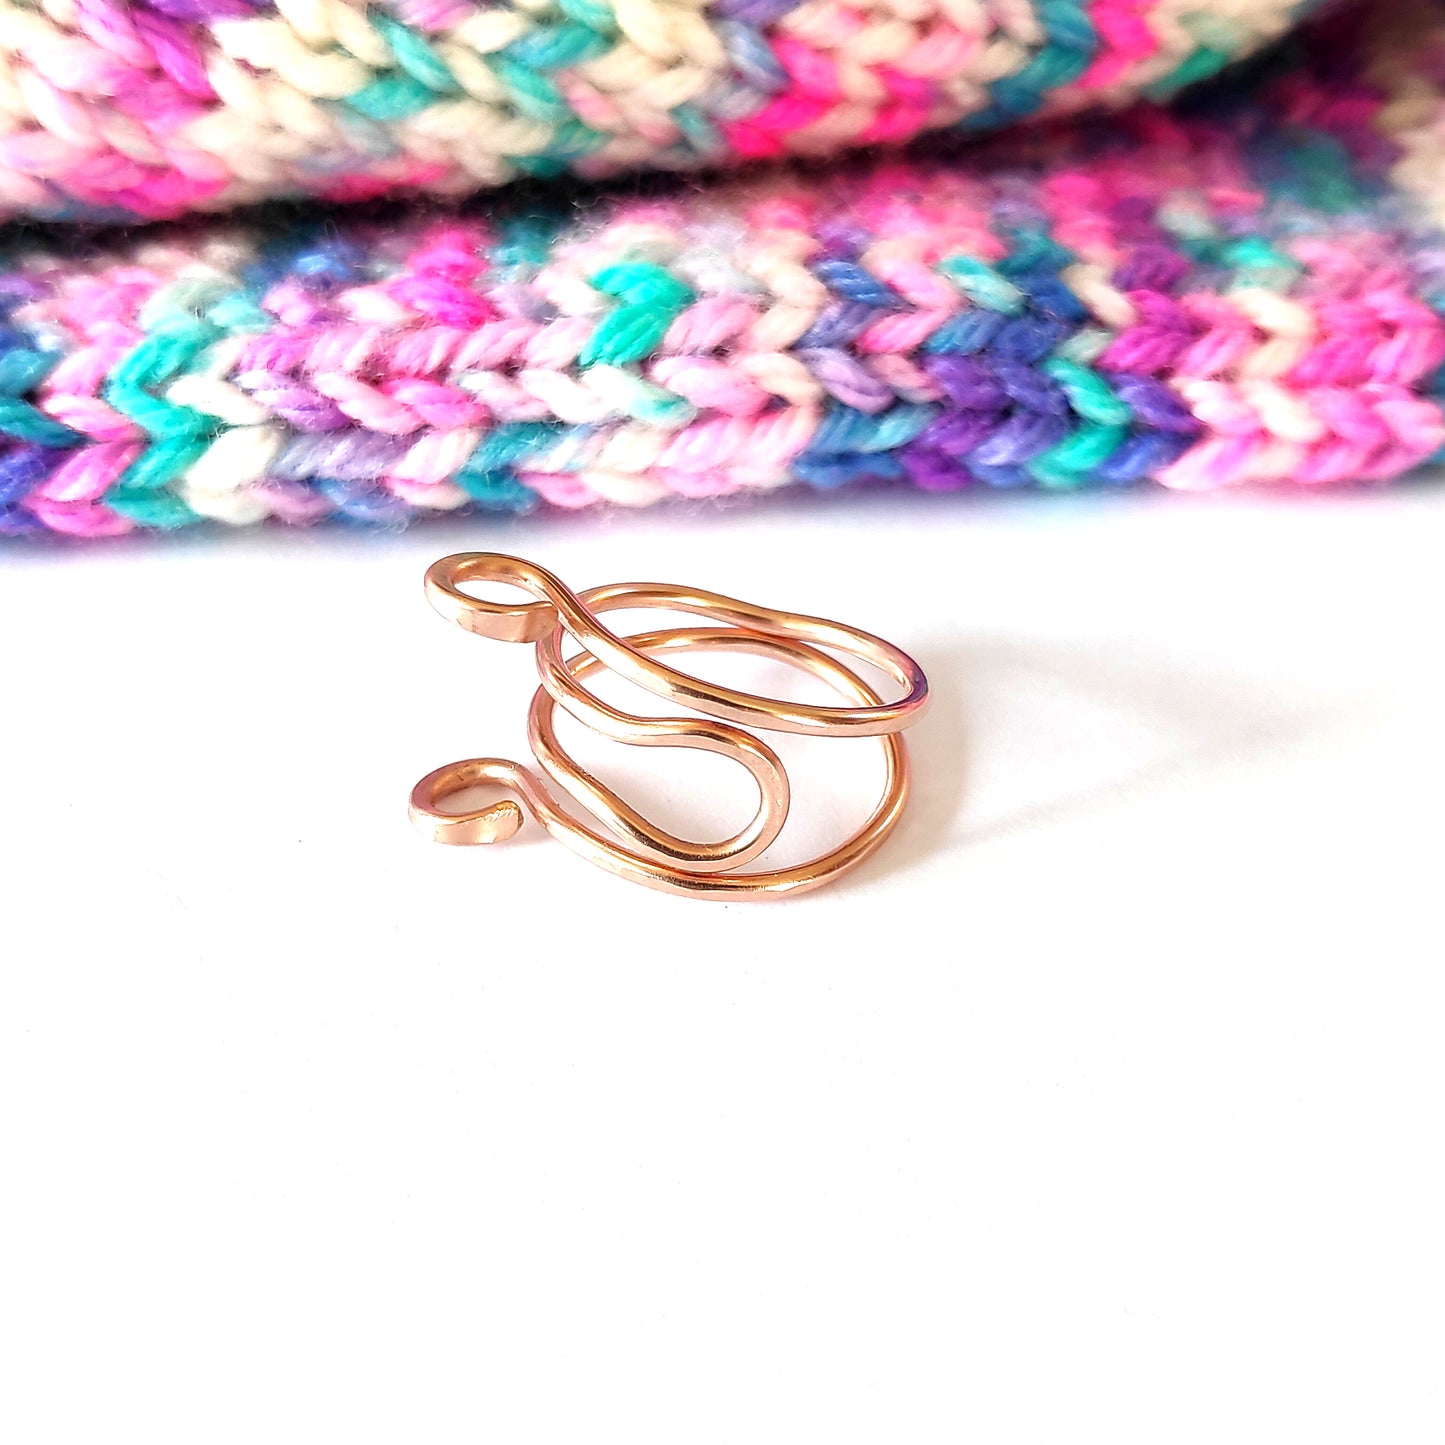 Yarn Ring in Gold - Double Hook